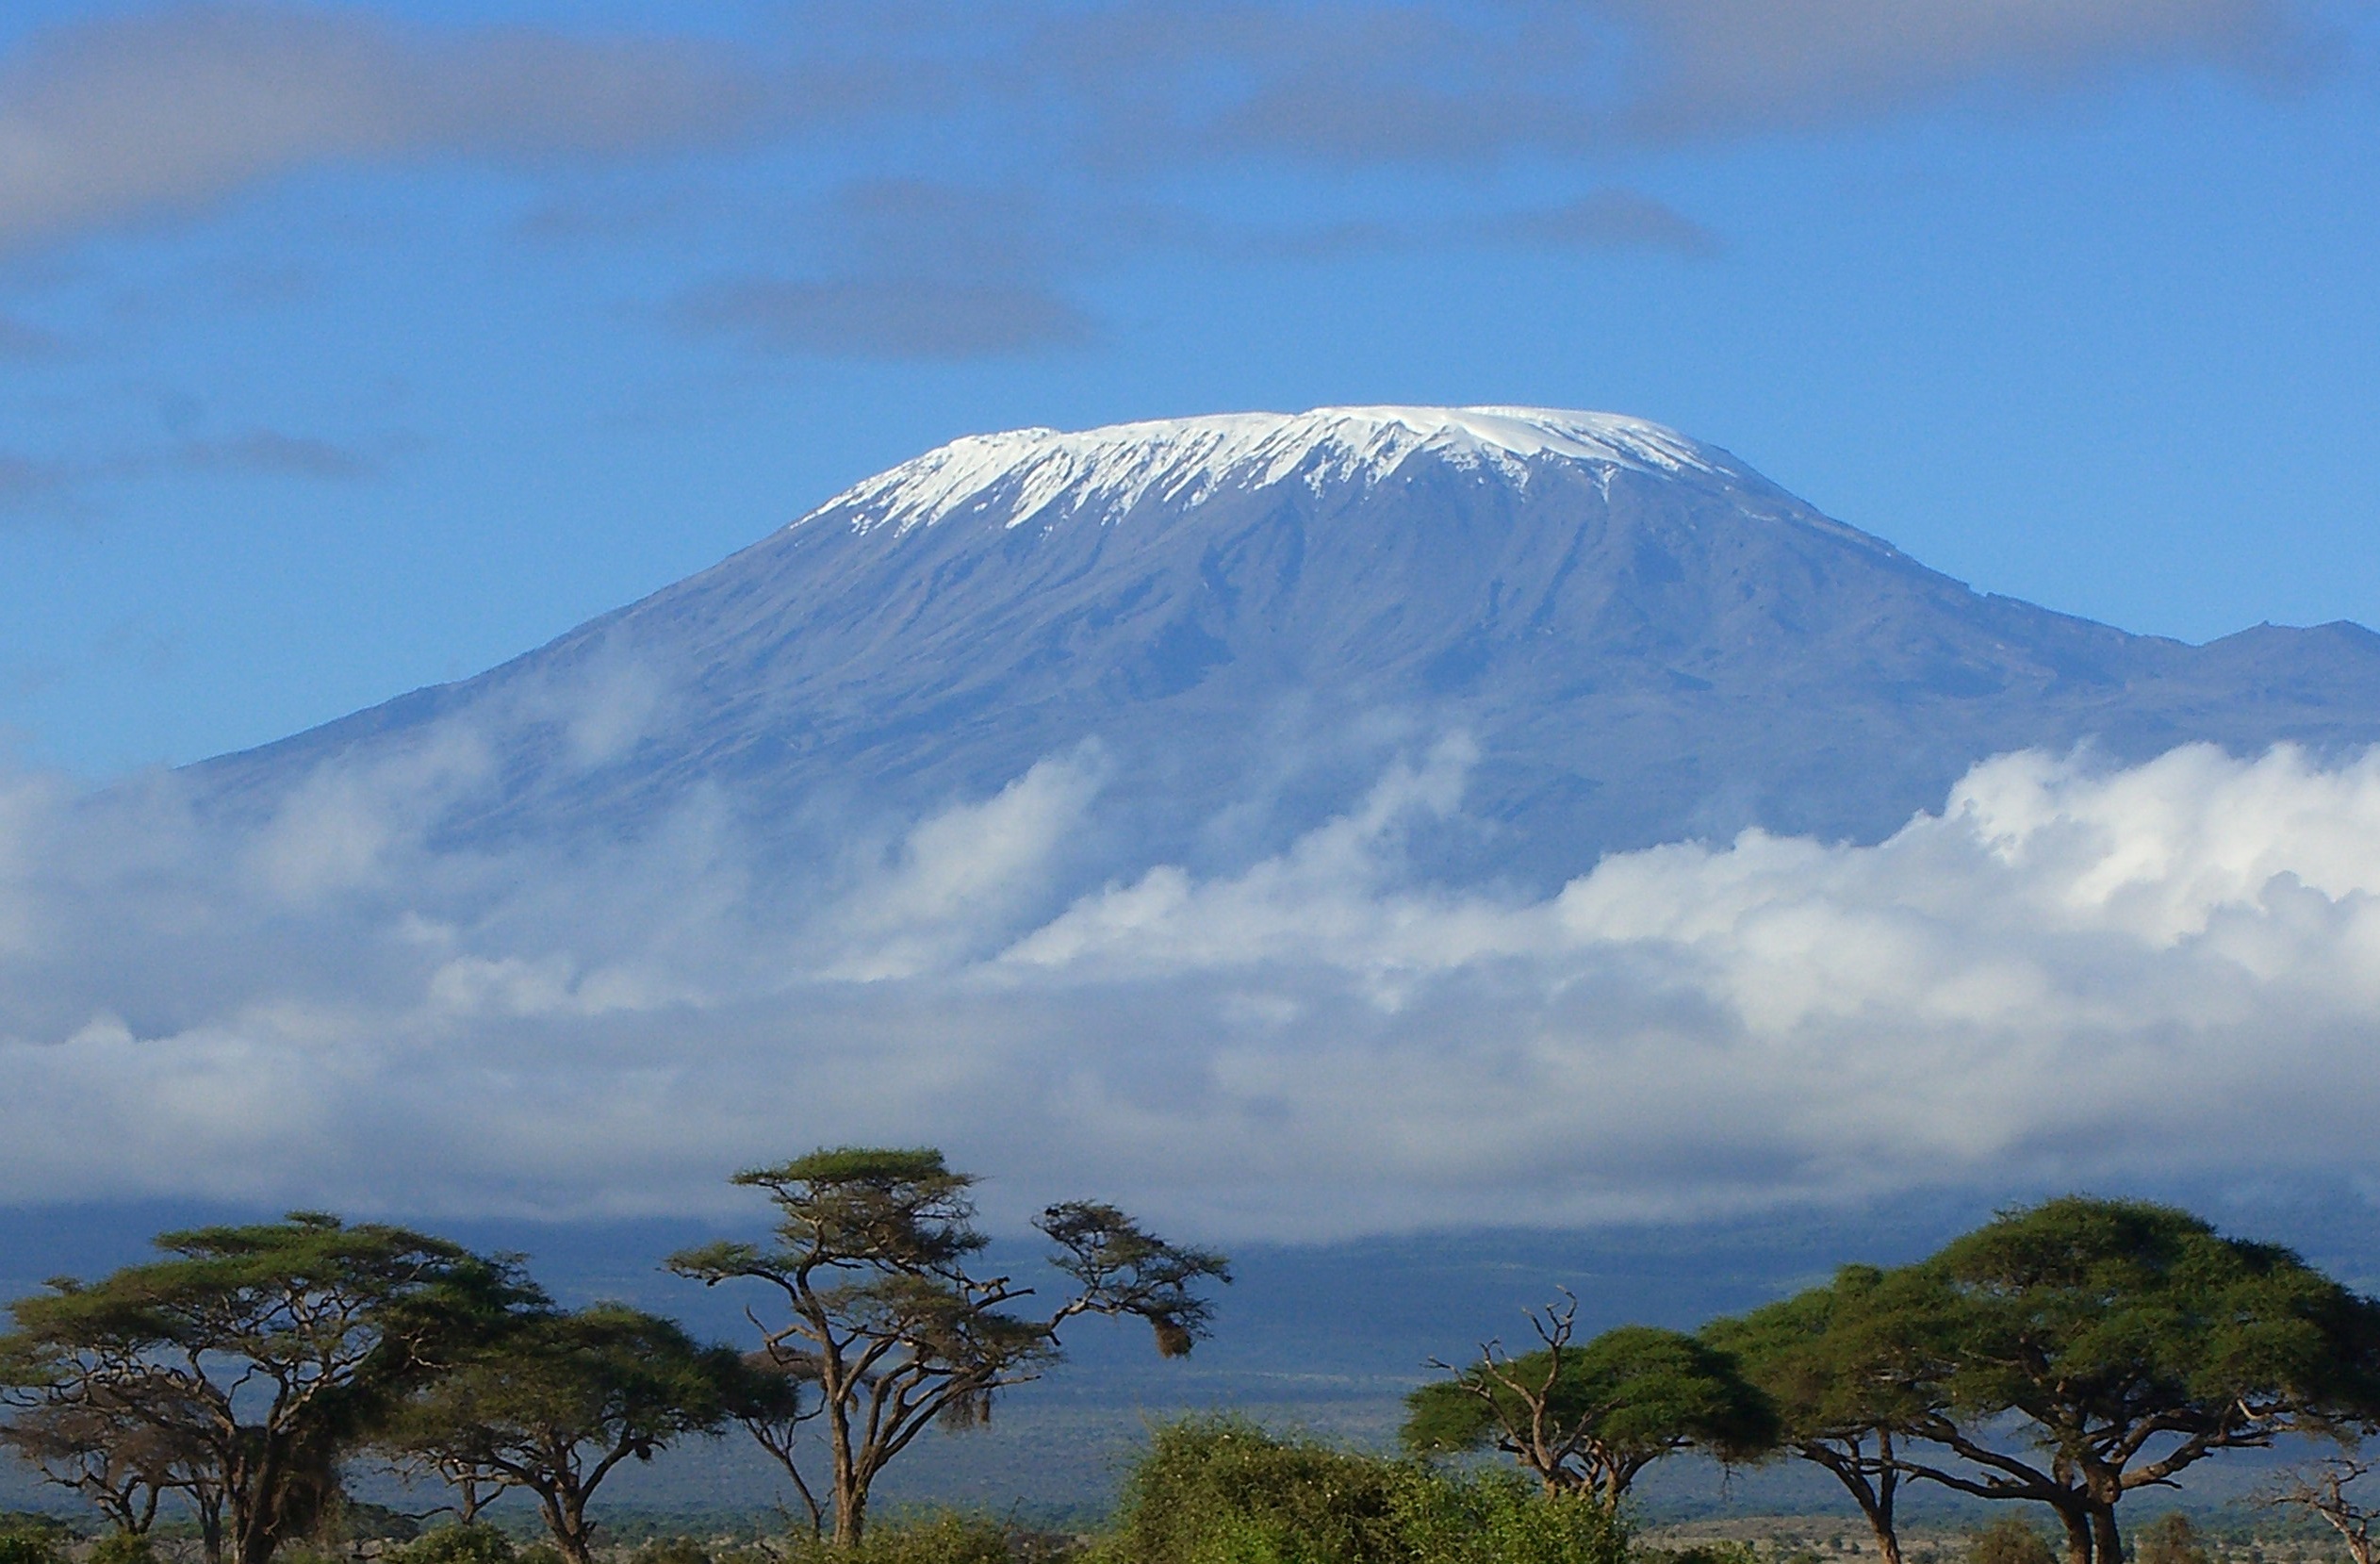 Amazing Mount Kilimanjaro Pictures & Backgrounds